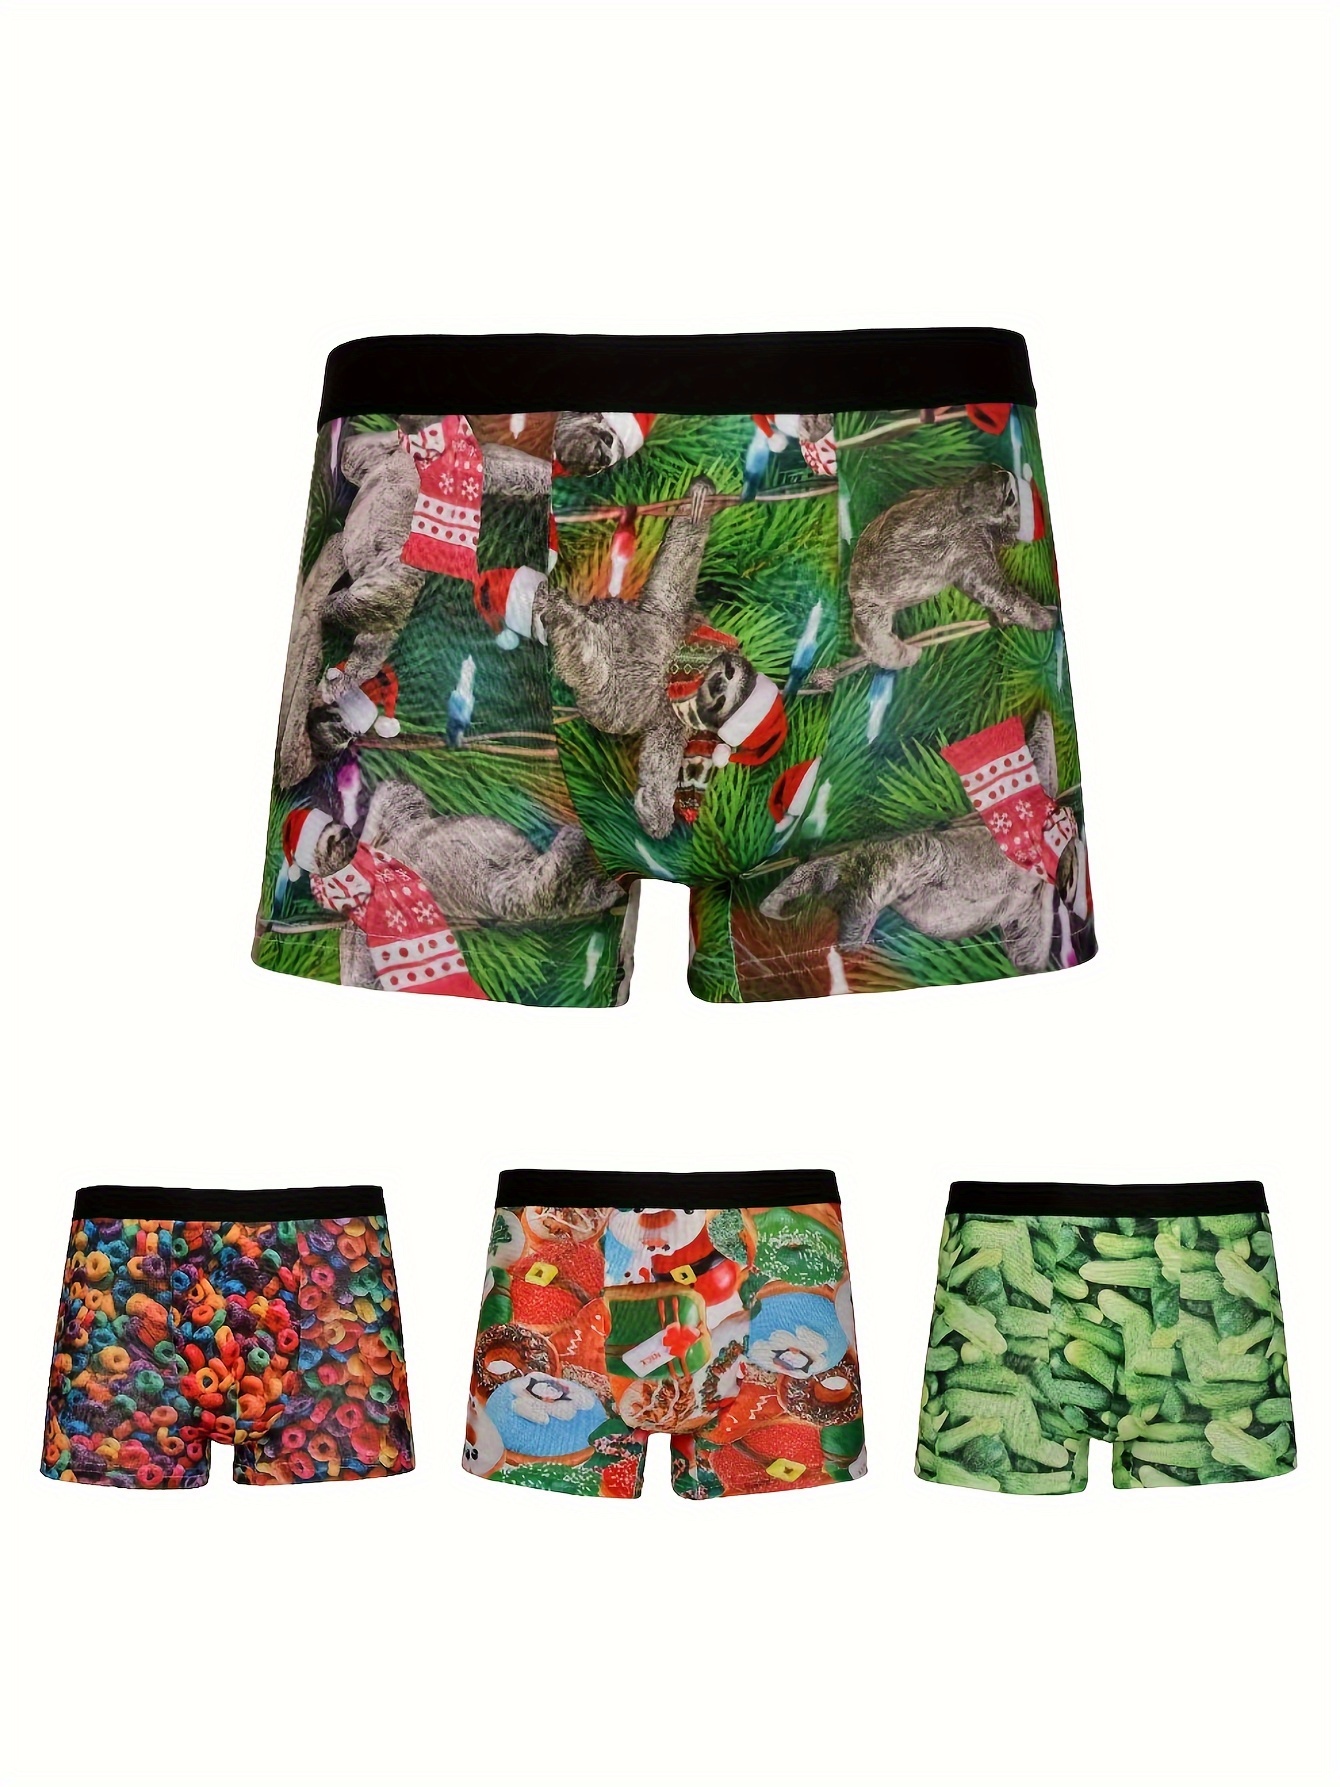 Camouflage Shark Ethika Man Underwear Boxer Briefs Sports Pants US Size  S-3XL 